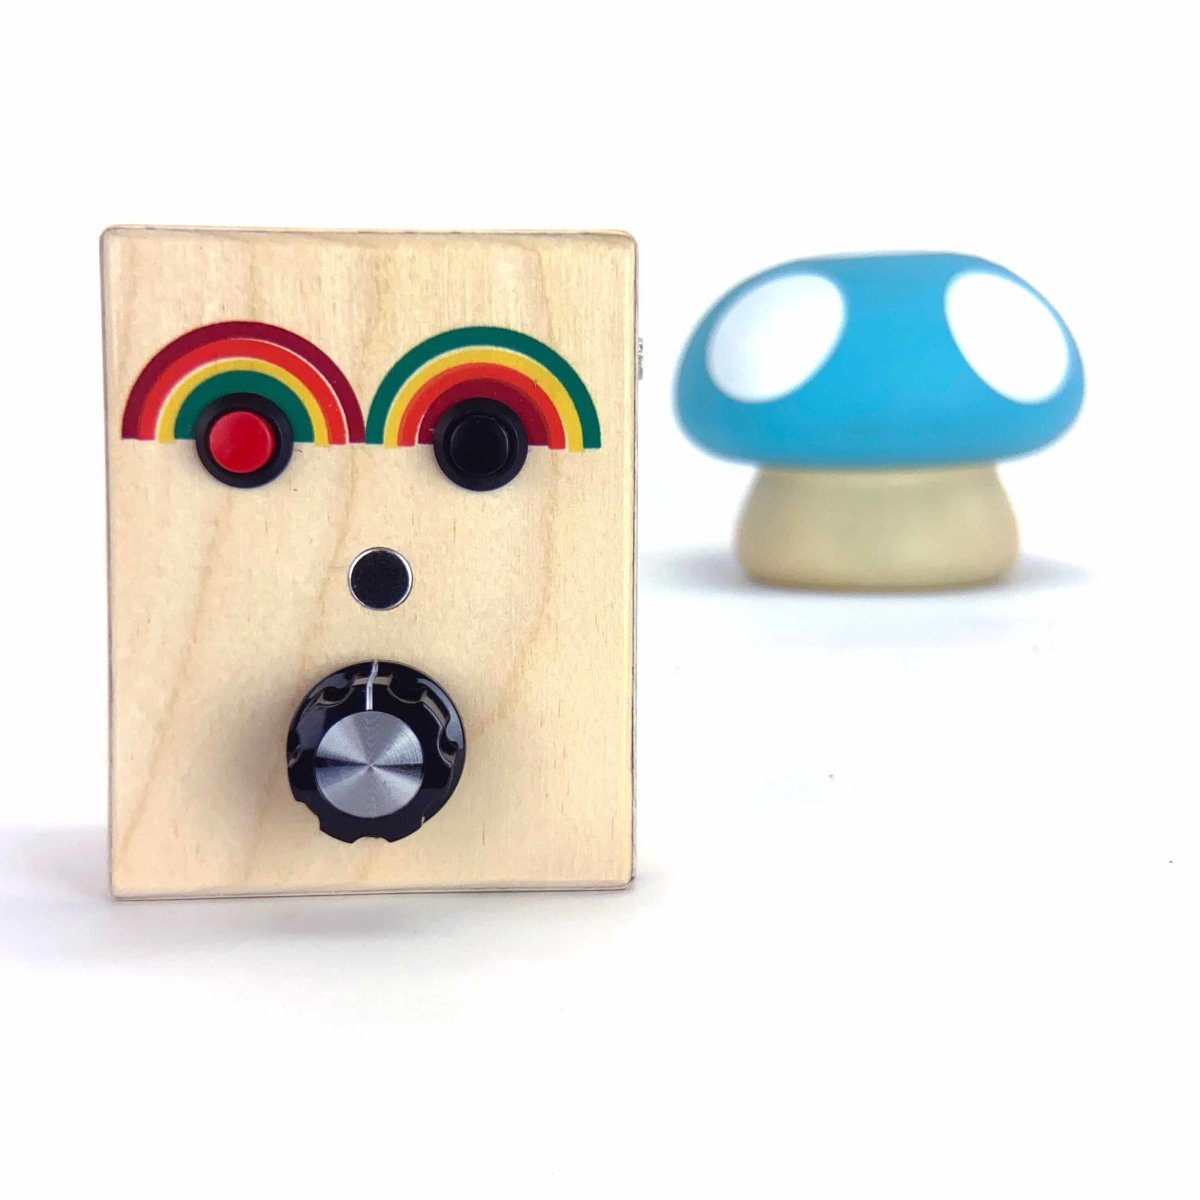 Rainbow handmade wooden voice recorder